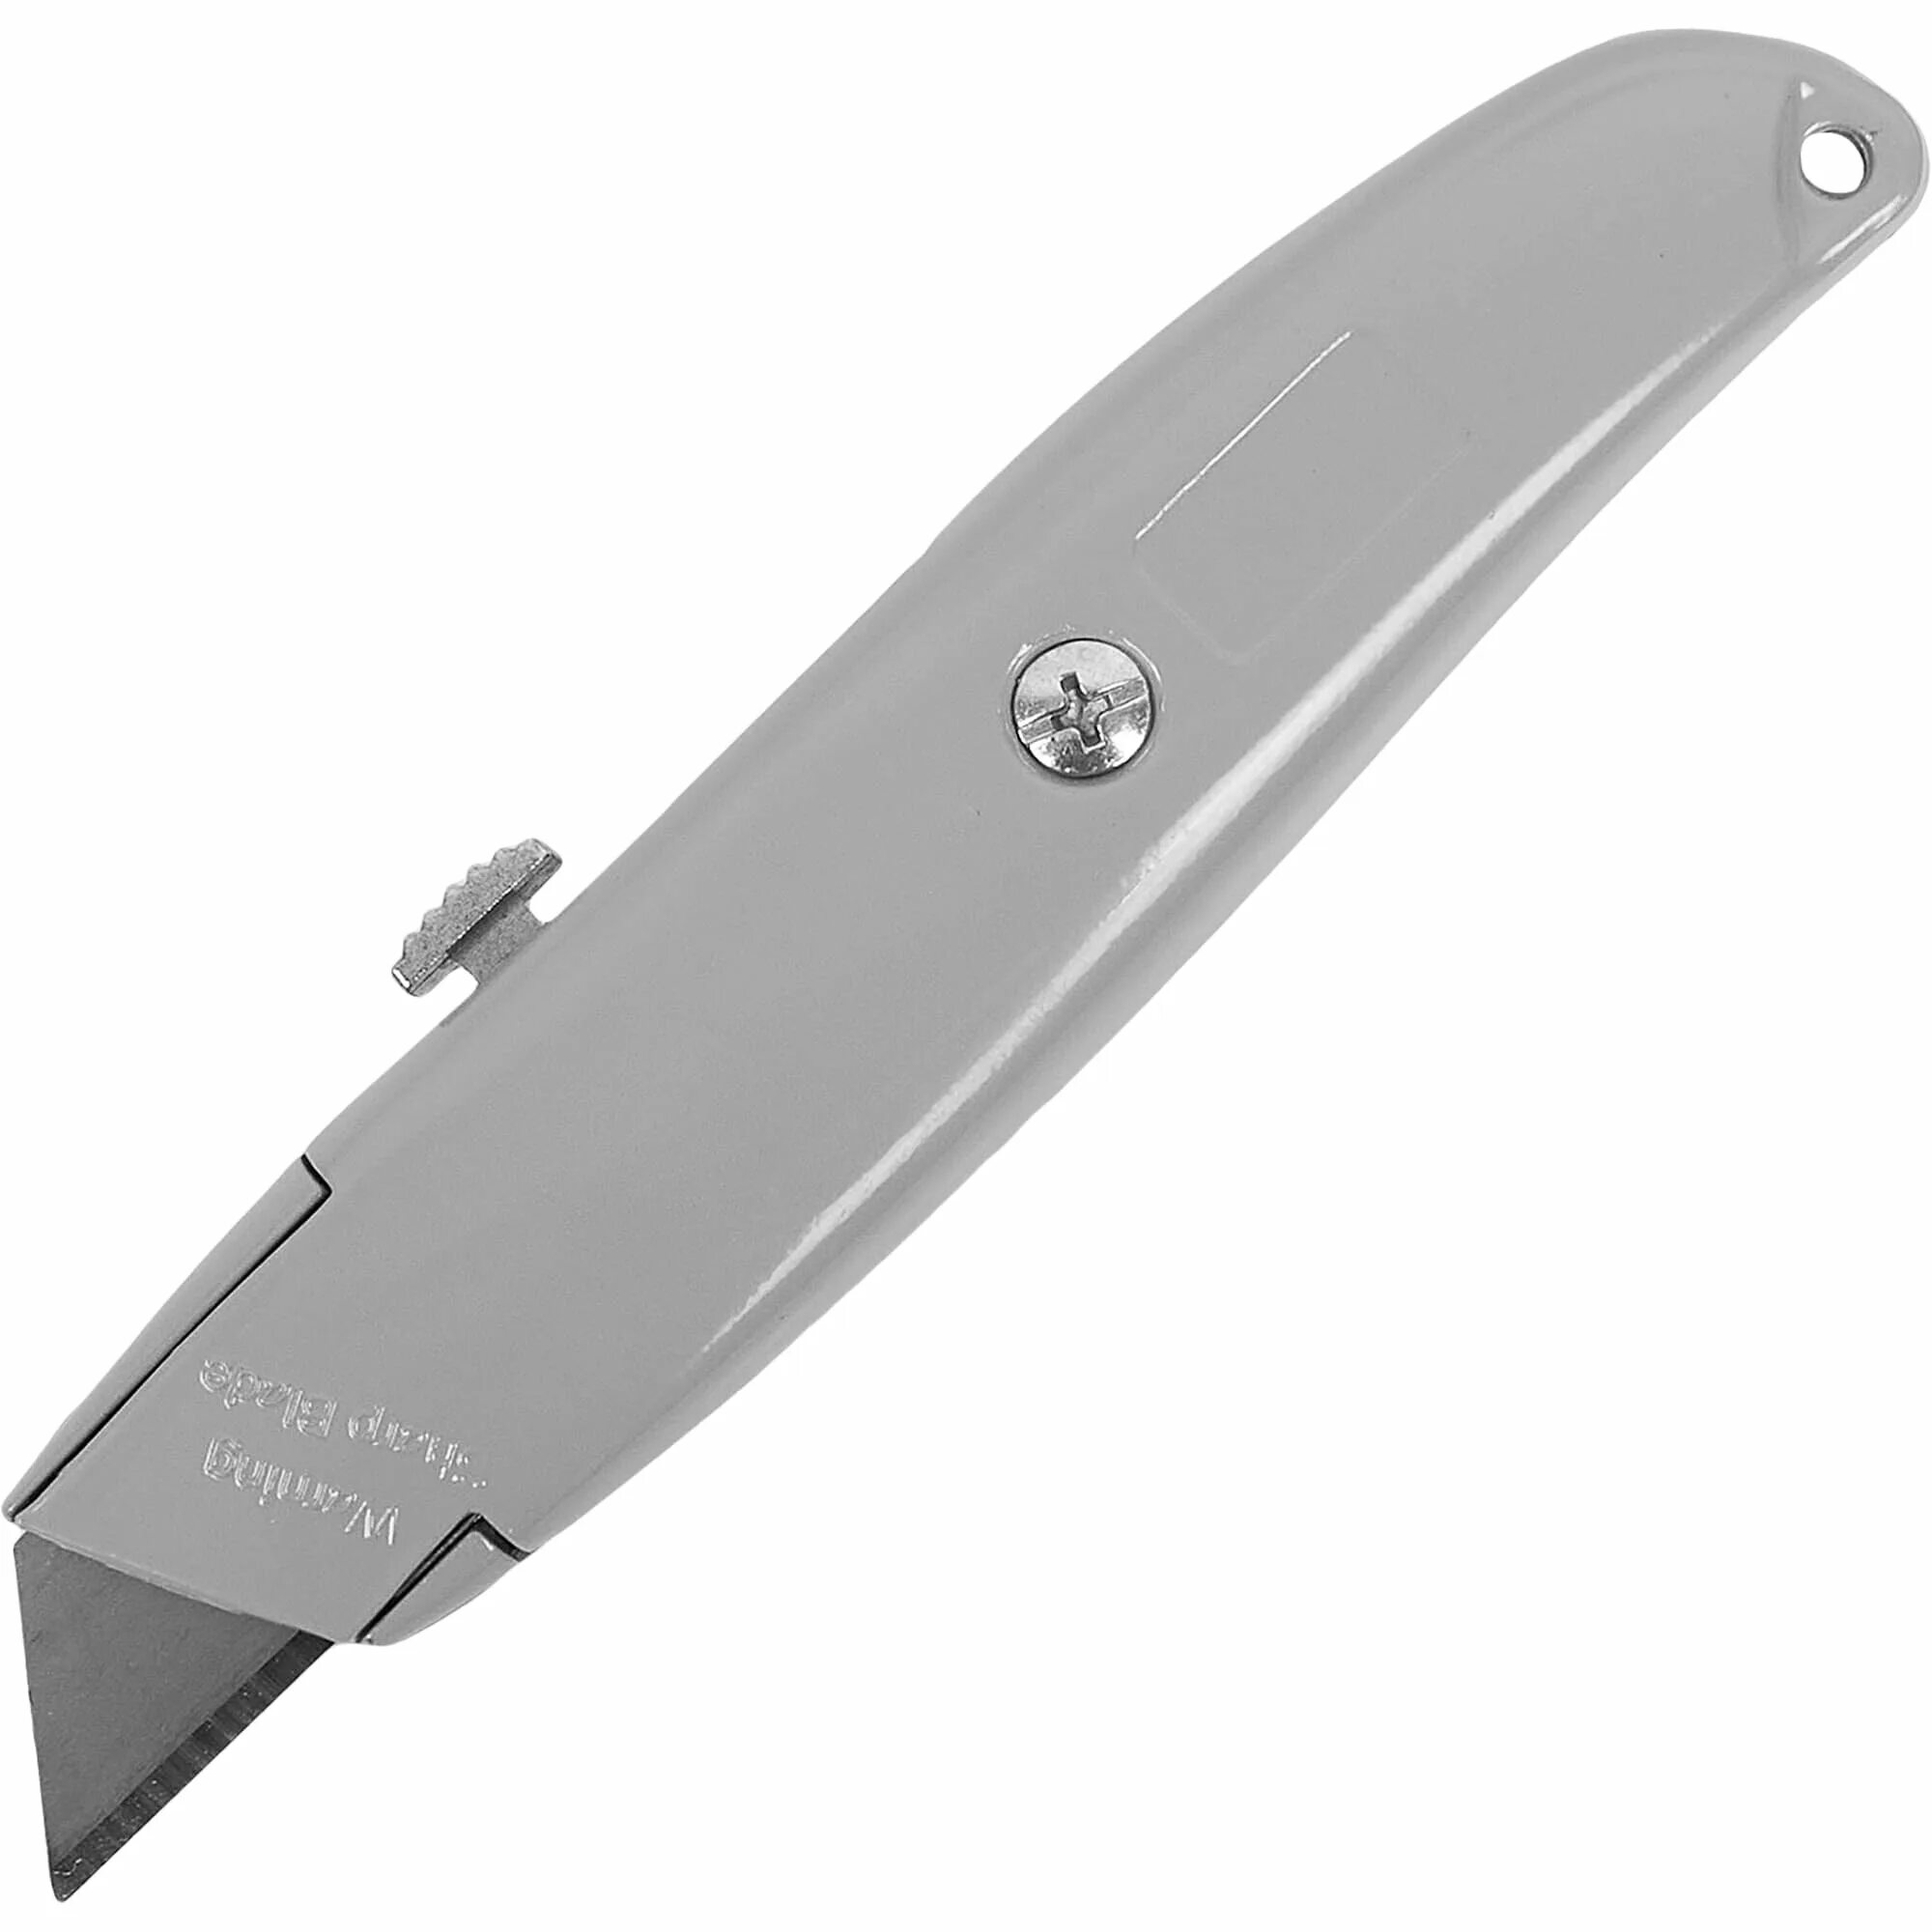 Монтажный нож Matrix 78959. 103140 Нож трапециевидное лезвие USP mj248 металлический. Нож Dexter 10-25 мм трапециевидное лезвие. Нож Dexter трапециевидное лезвие, изогнутая ручка.